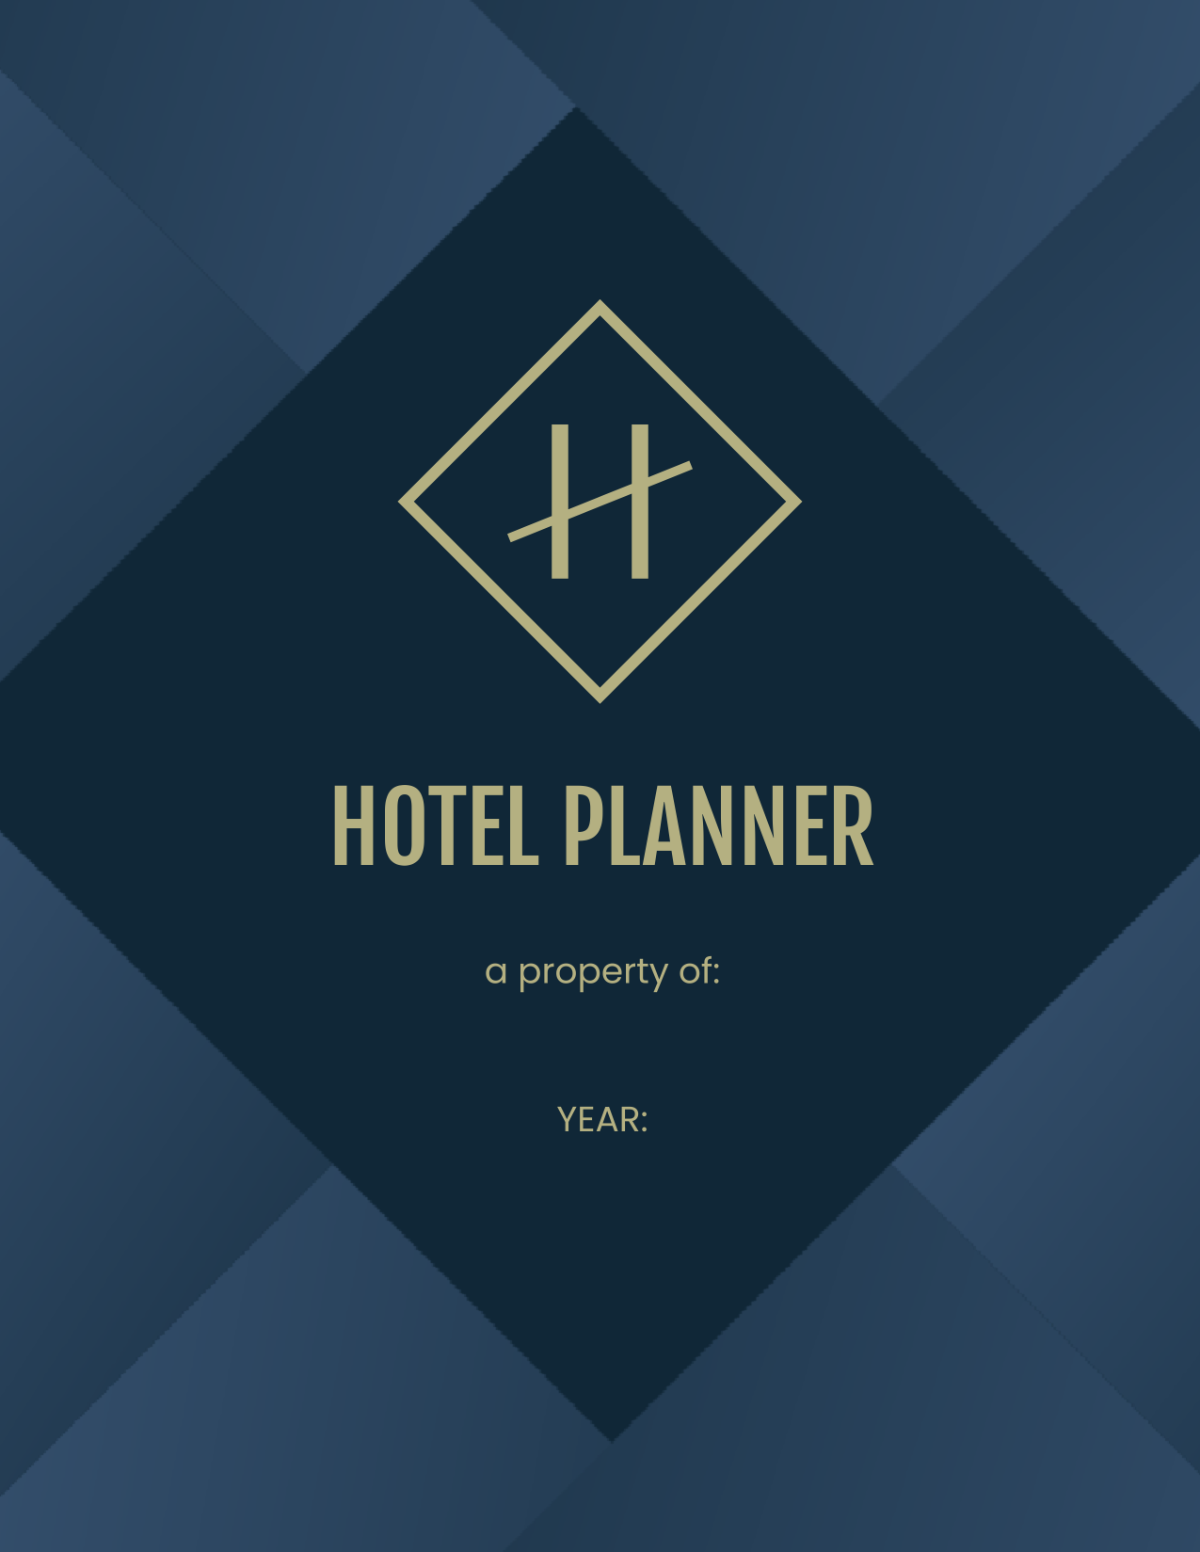 Free Editable Hotel Planner Template